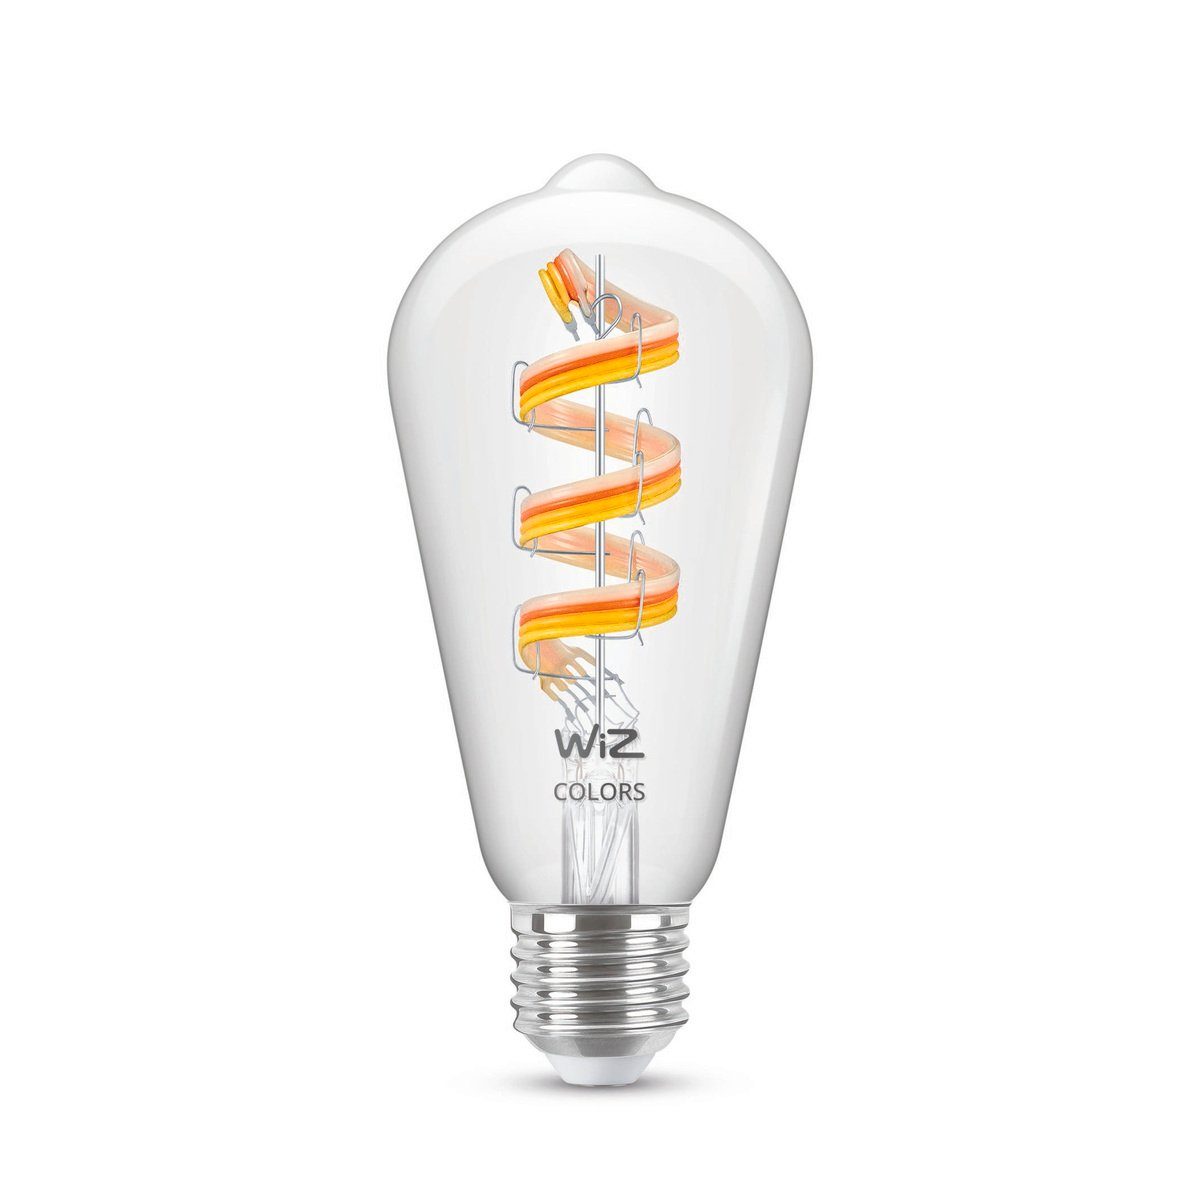 integriert fest LED-Lampe, WiZ Smarte LED LED-Leuchte